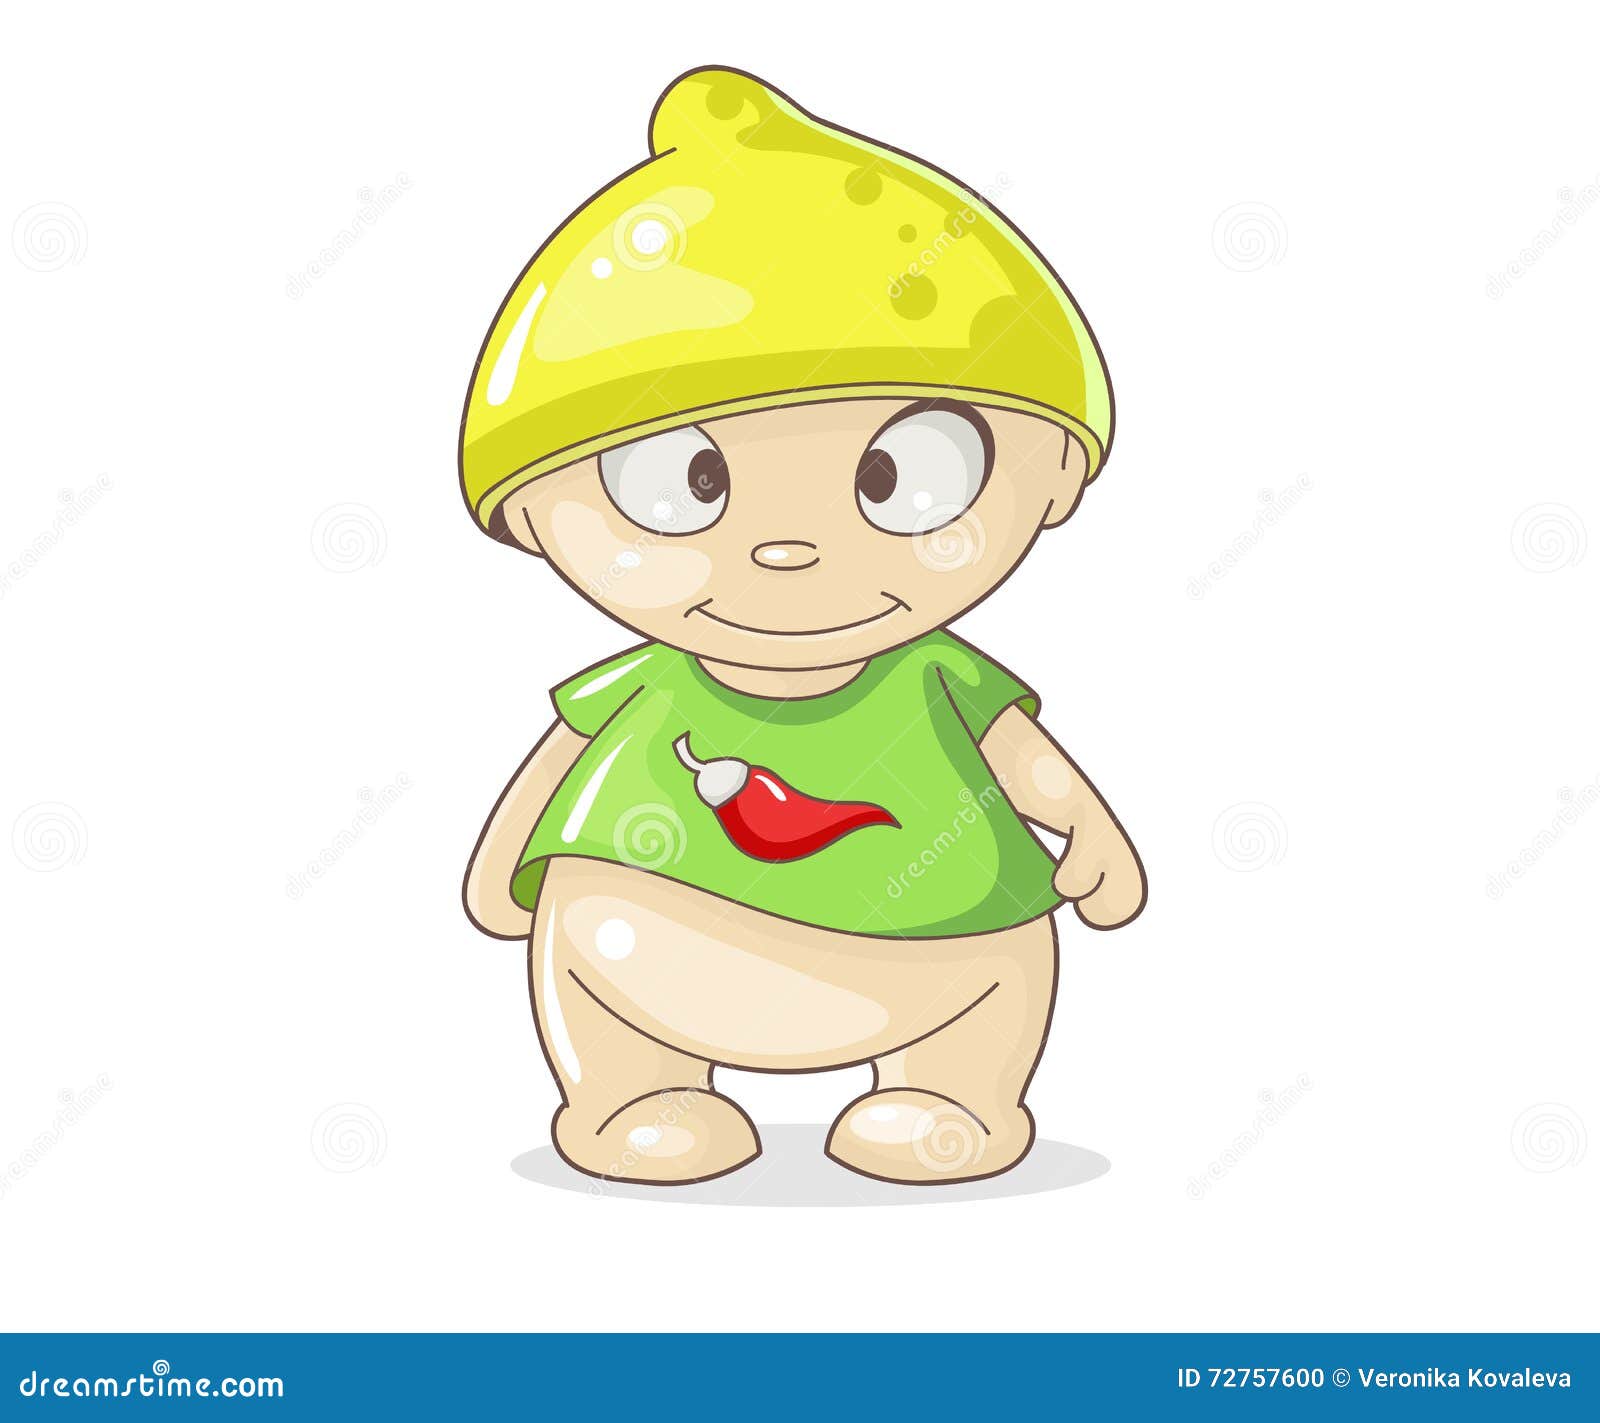 cartoon boy with hat lemon